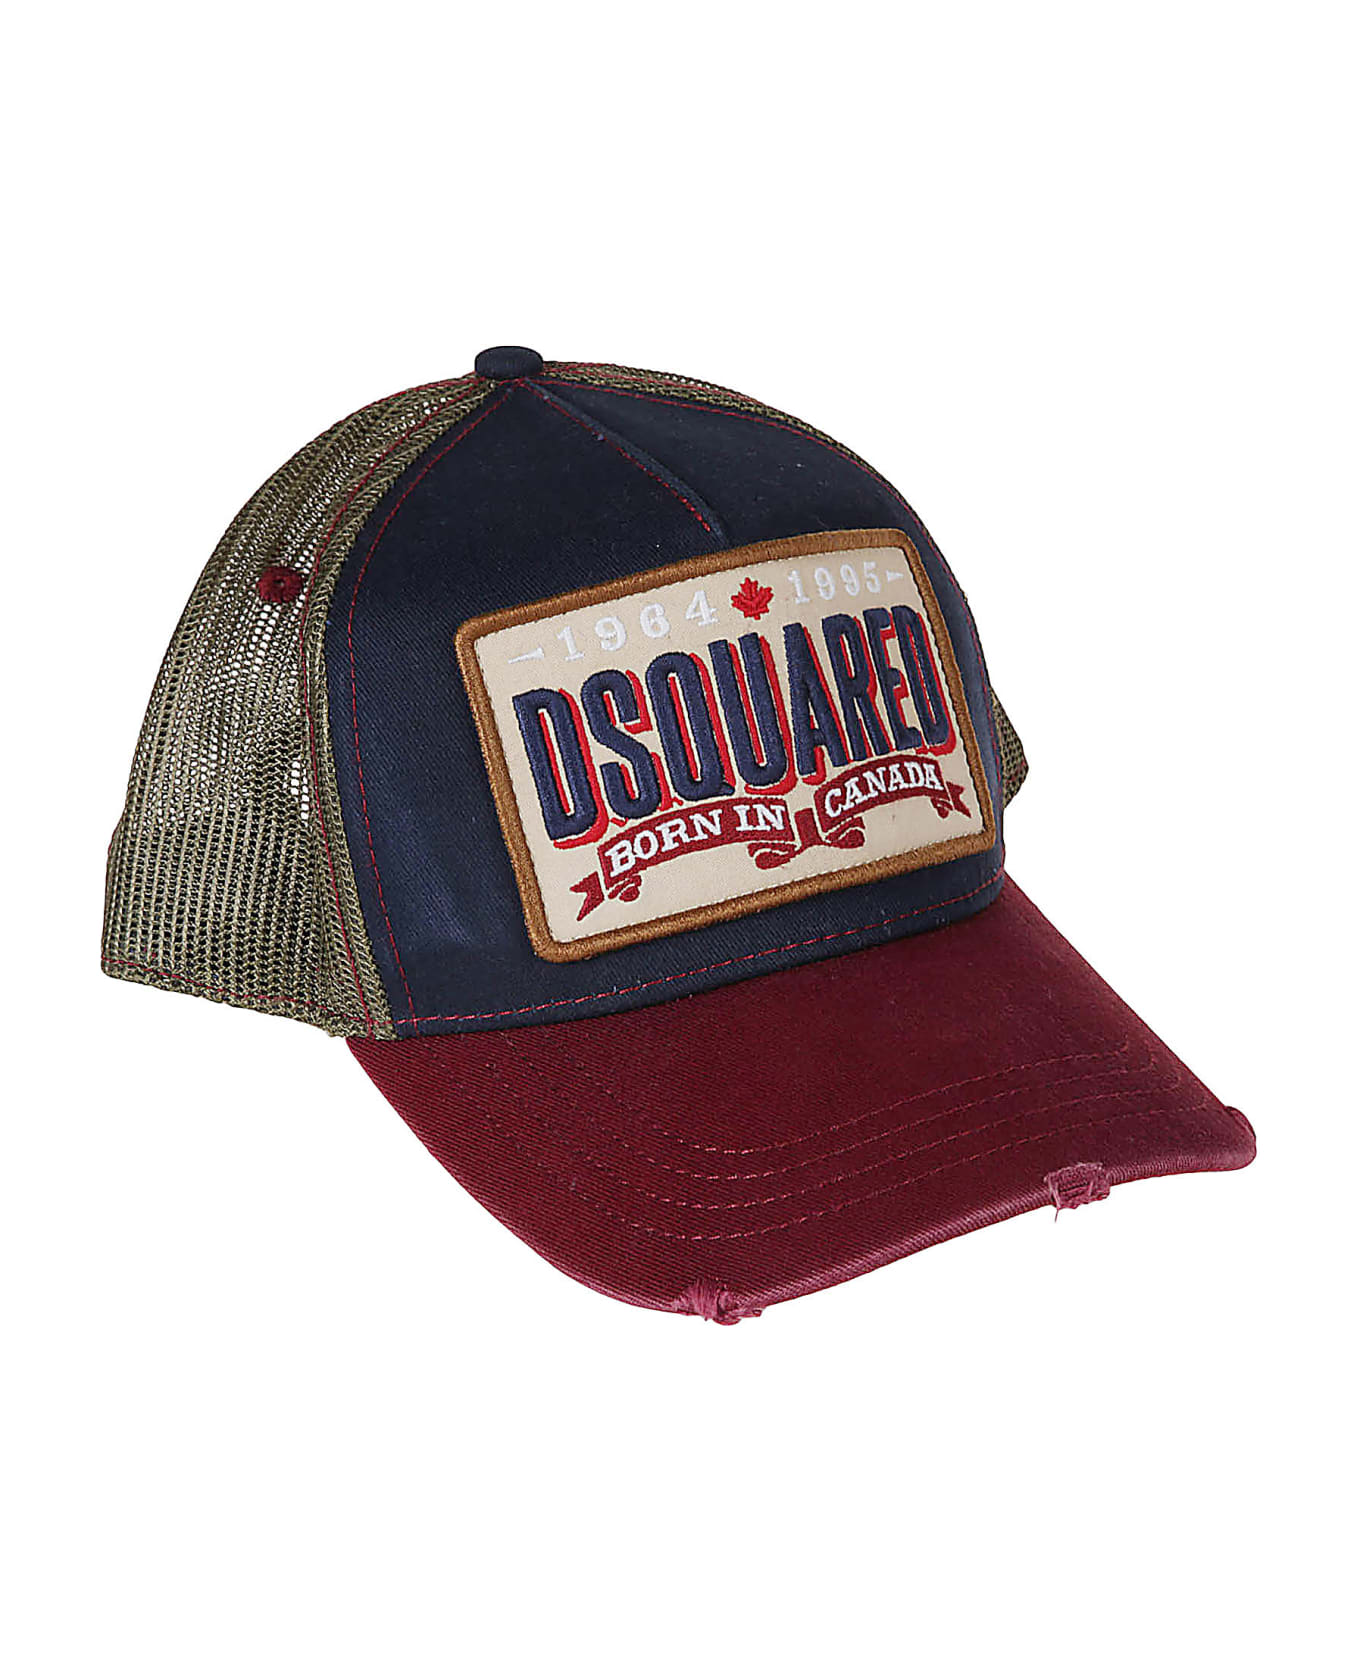 Dsquared2 Born In Canada Logo Cap - BORDEAUX NAVY 帽子